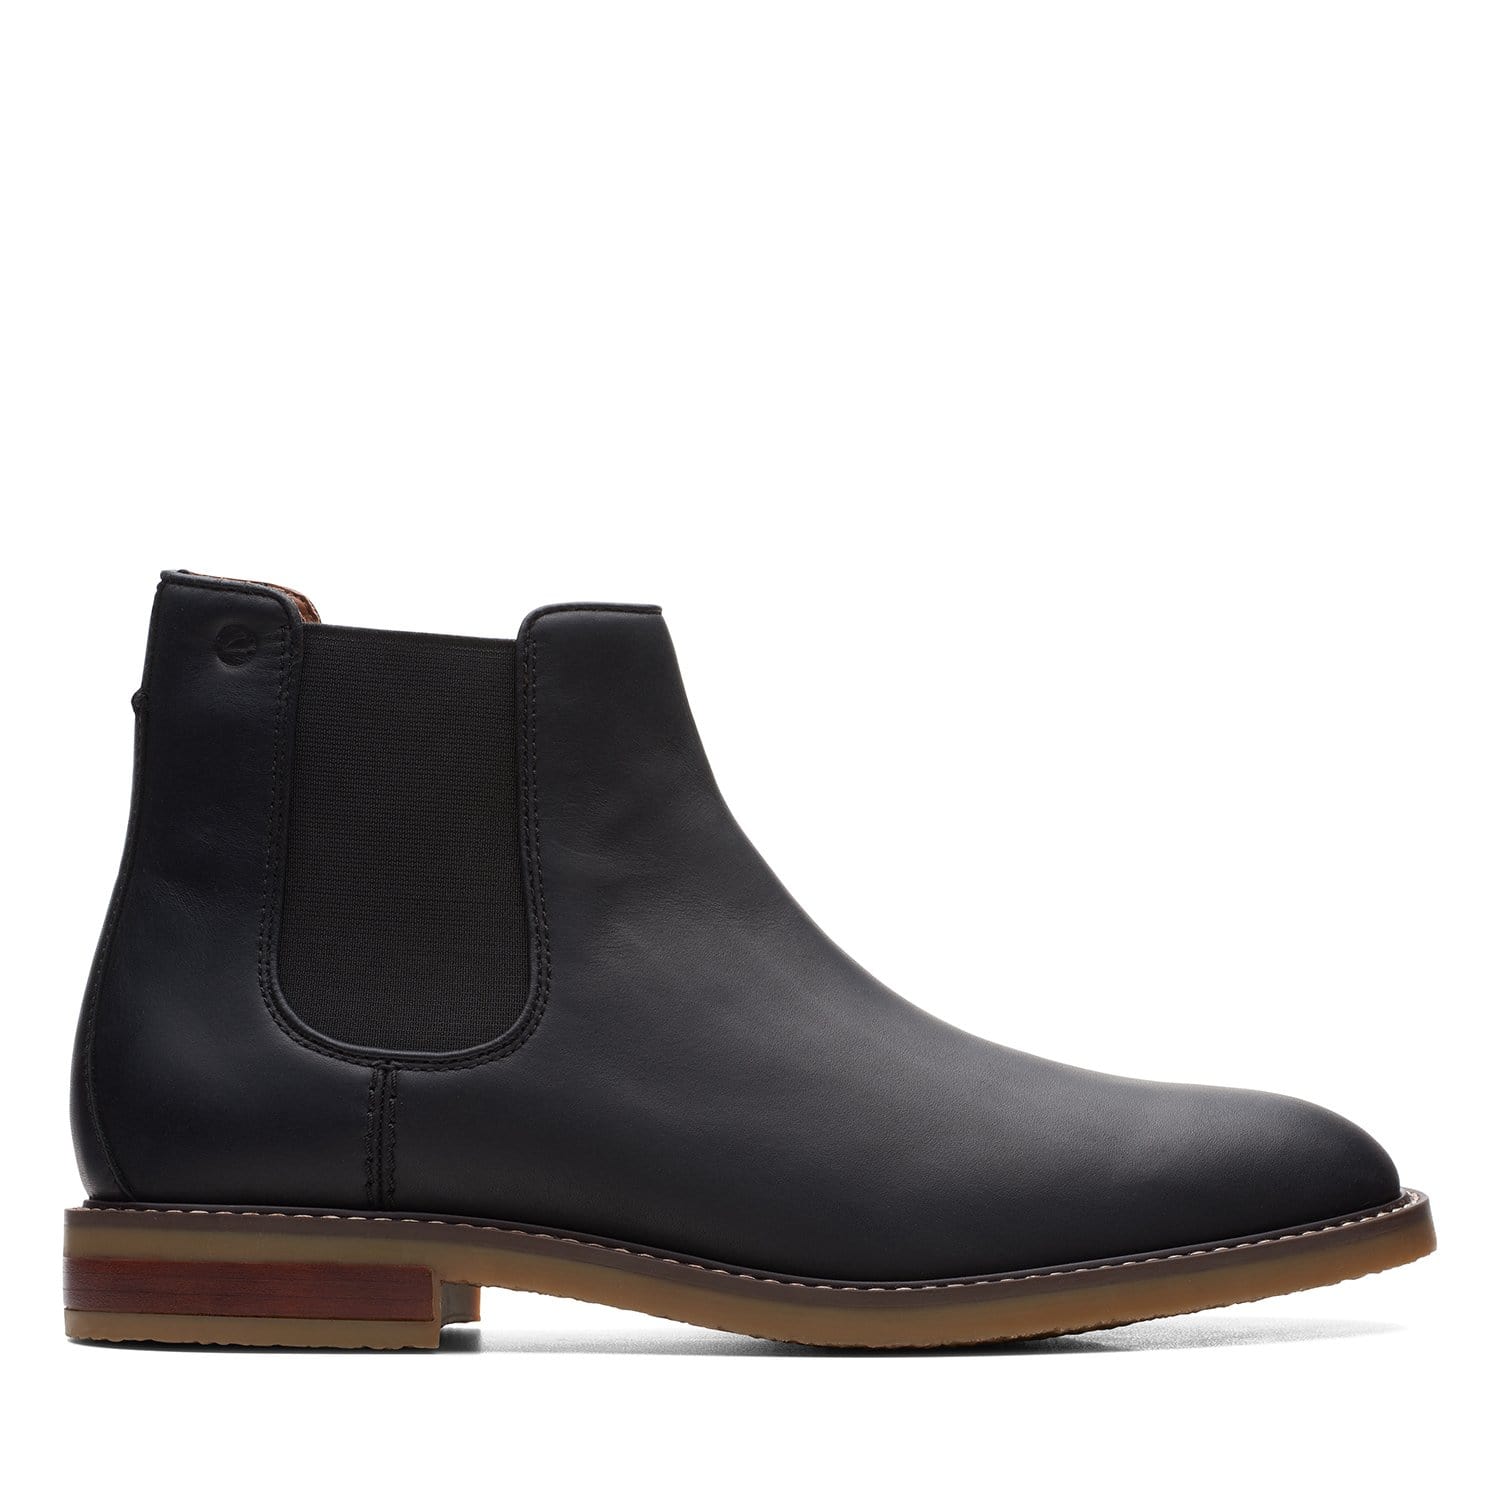 Clarks Jaxen Chelsea Boots - Black Leather - 26162729 - G Width (Standard Fit)